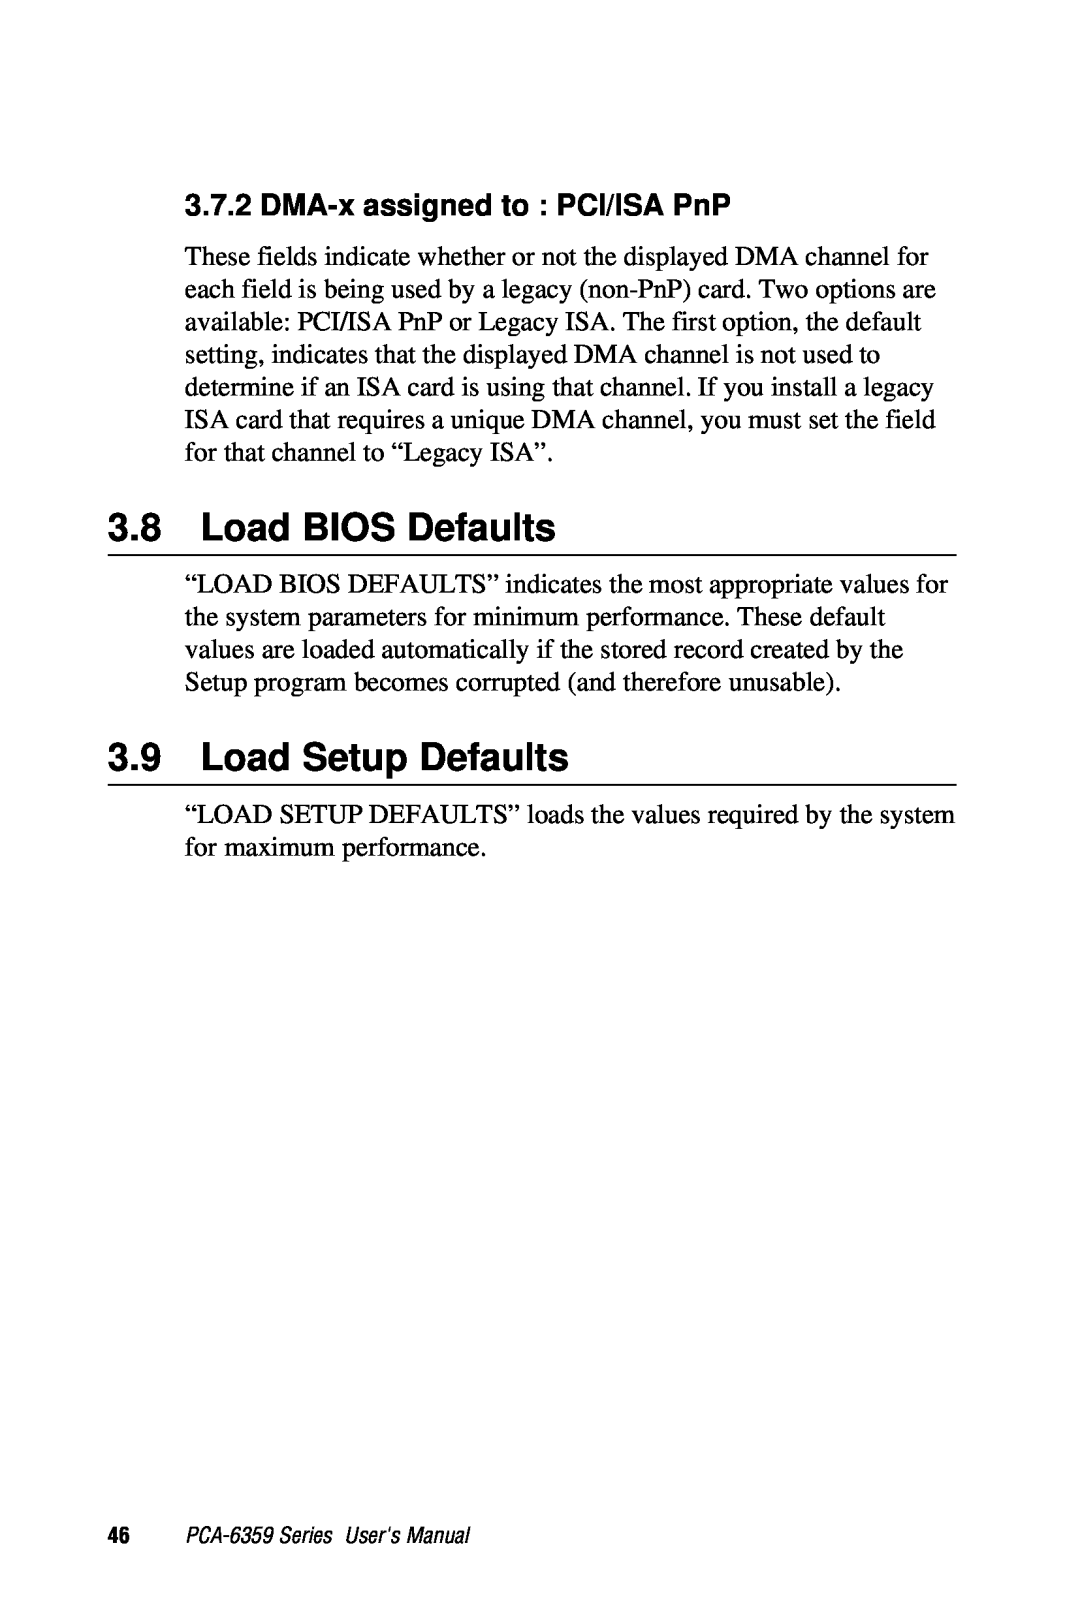 Advantech PCA-6359 user manual Load BIOS Defaults, Load Setup Defaults, DMA-x assigned to PCI/ISA PnP 